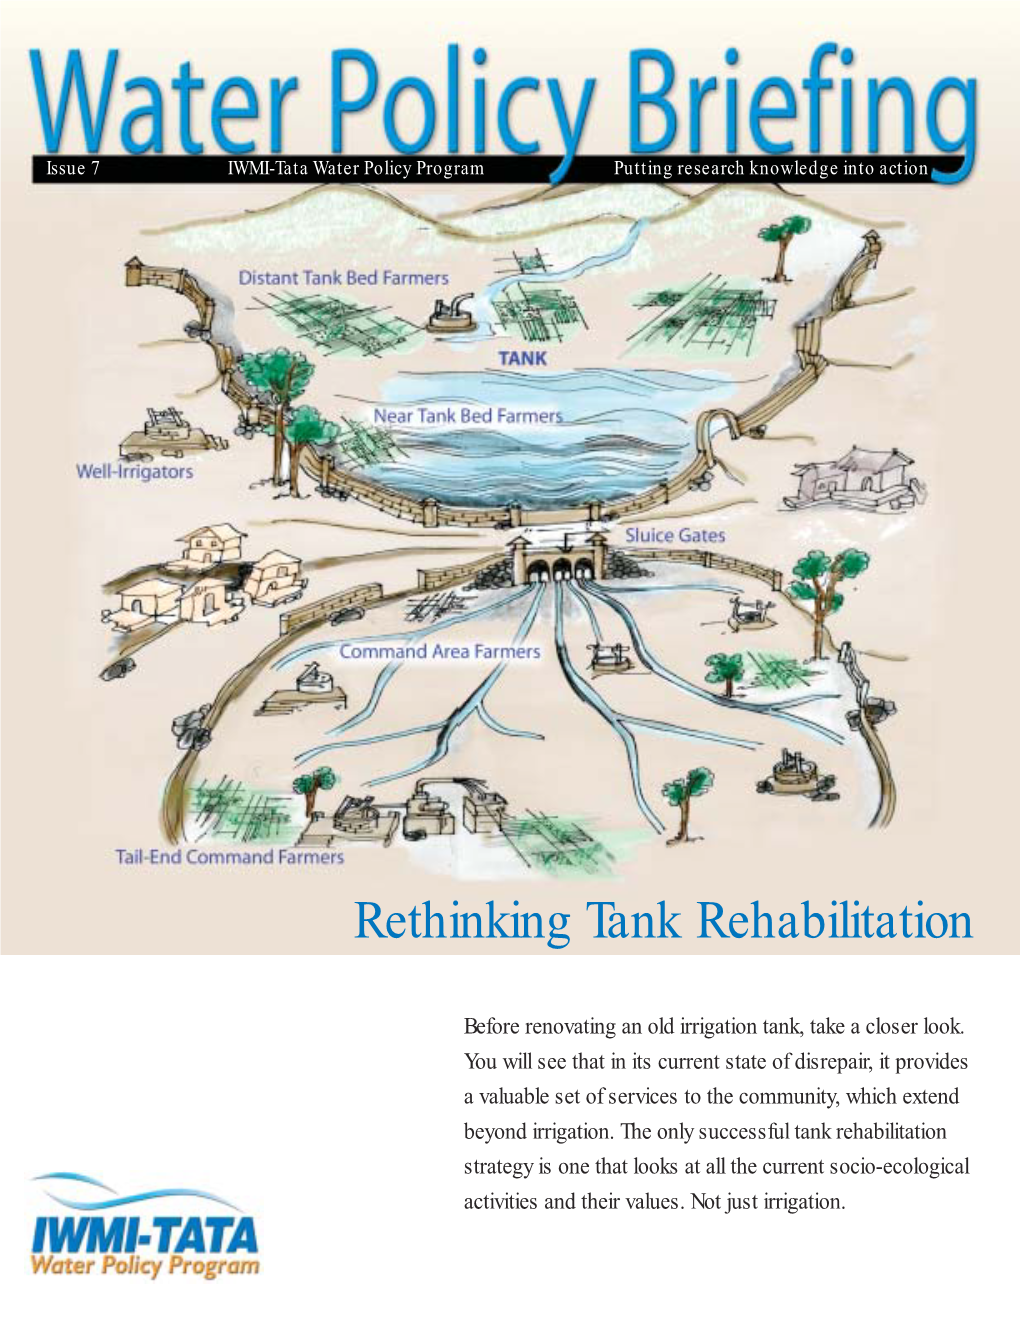 Rethinking Tank Rehabilitation